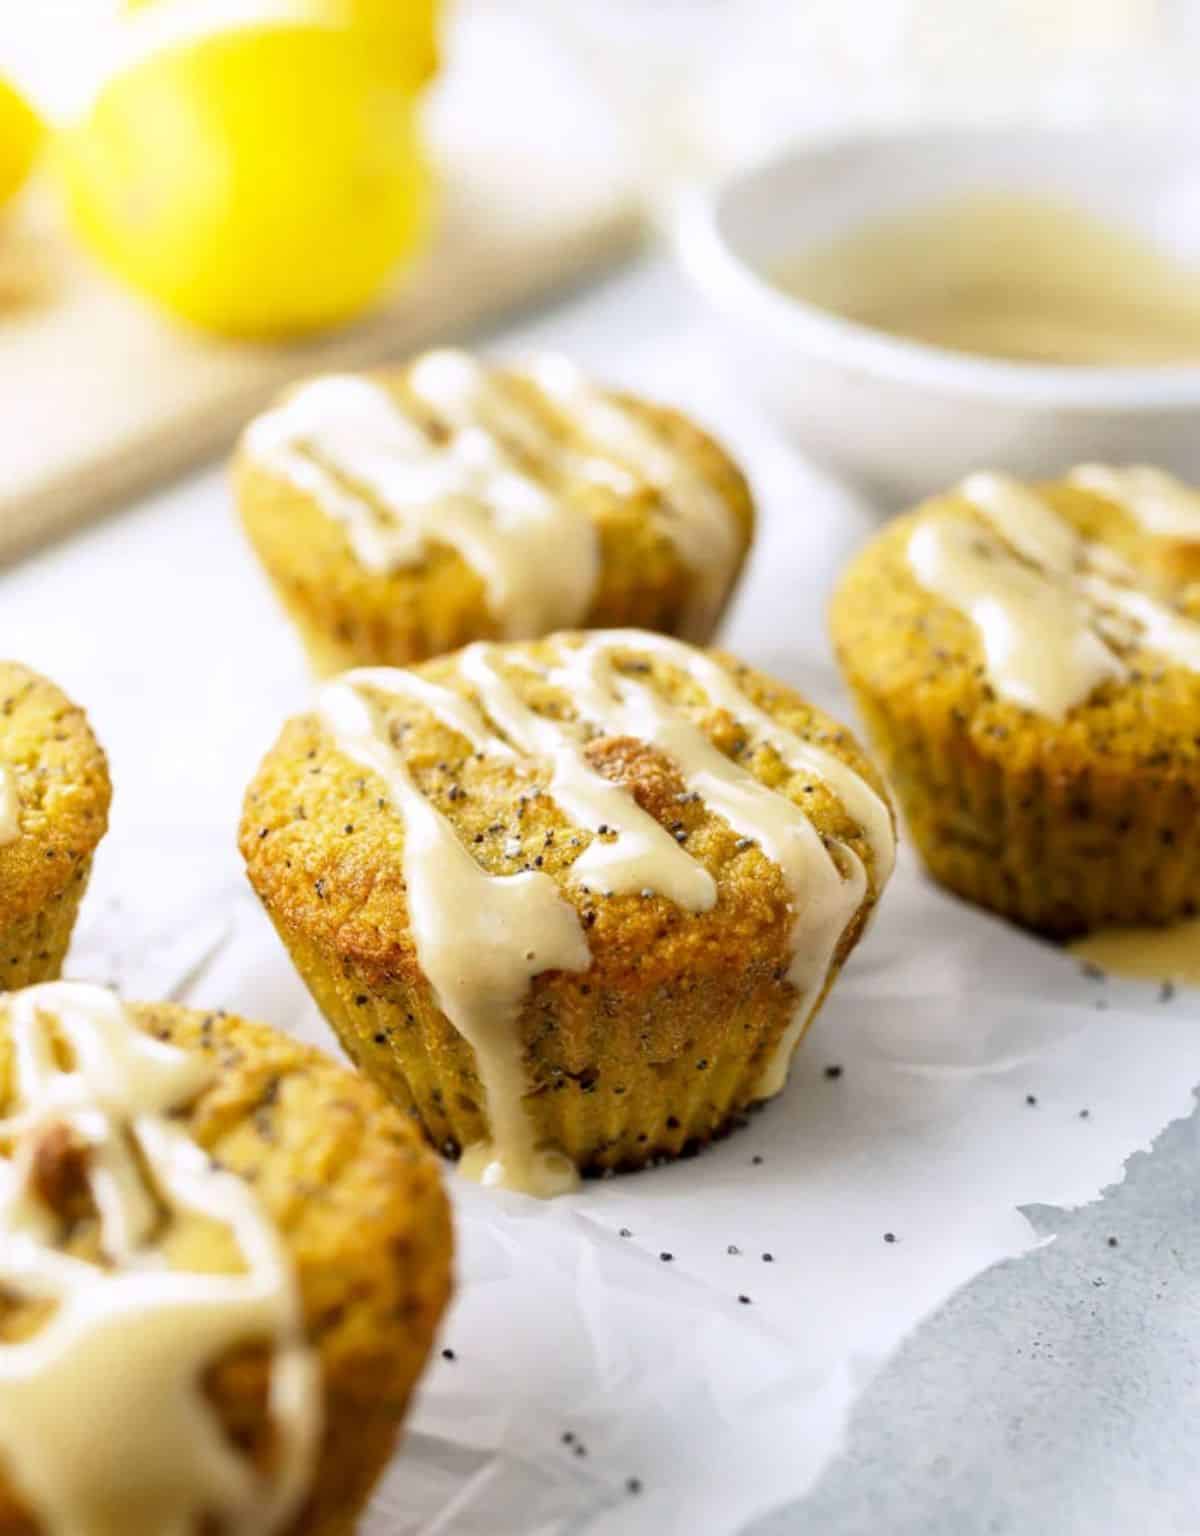 Tasty gluten-free Coconut Flour Lemon Poppyseed Muffins.